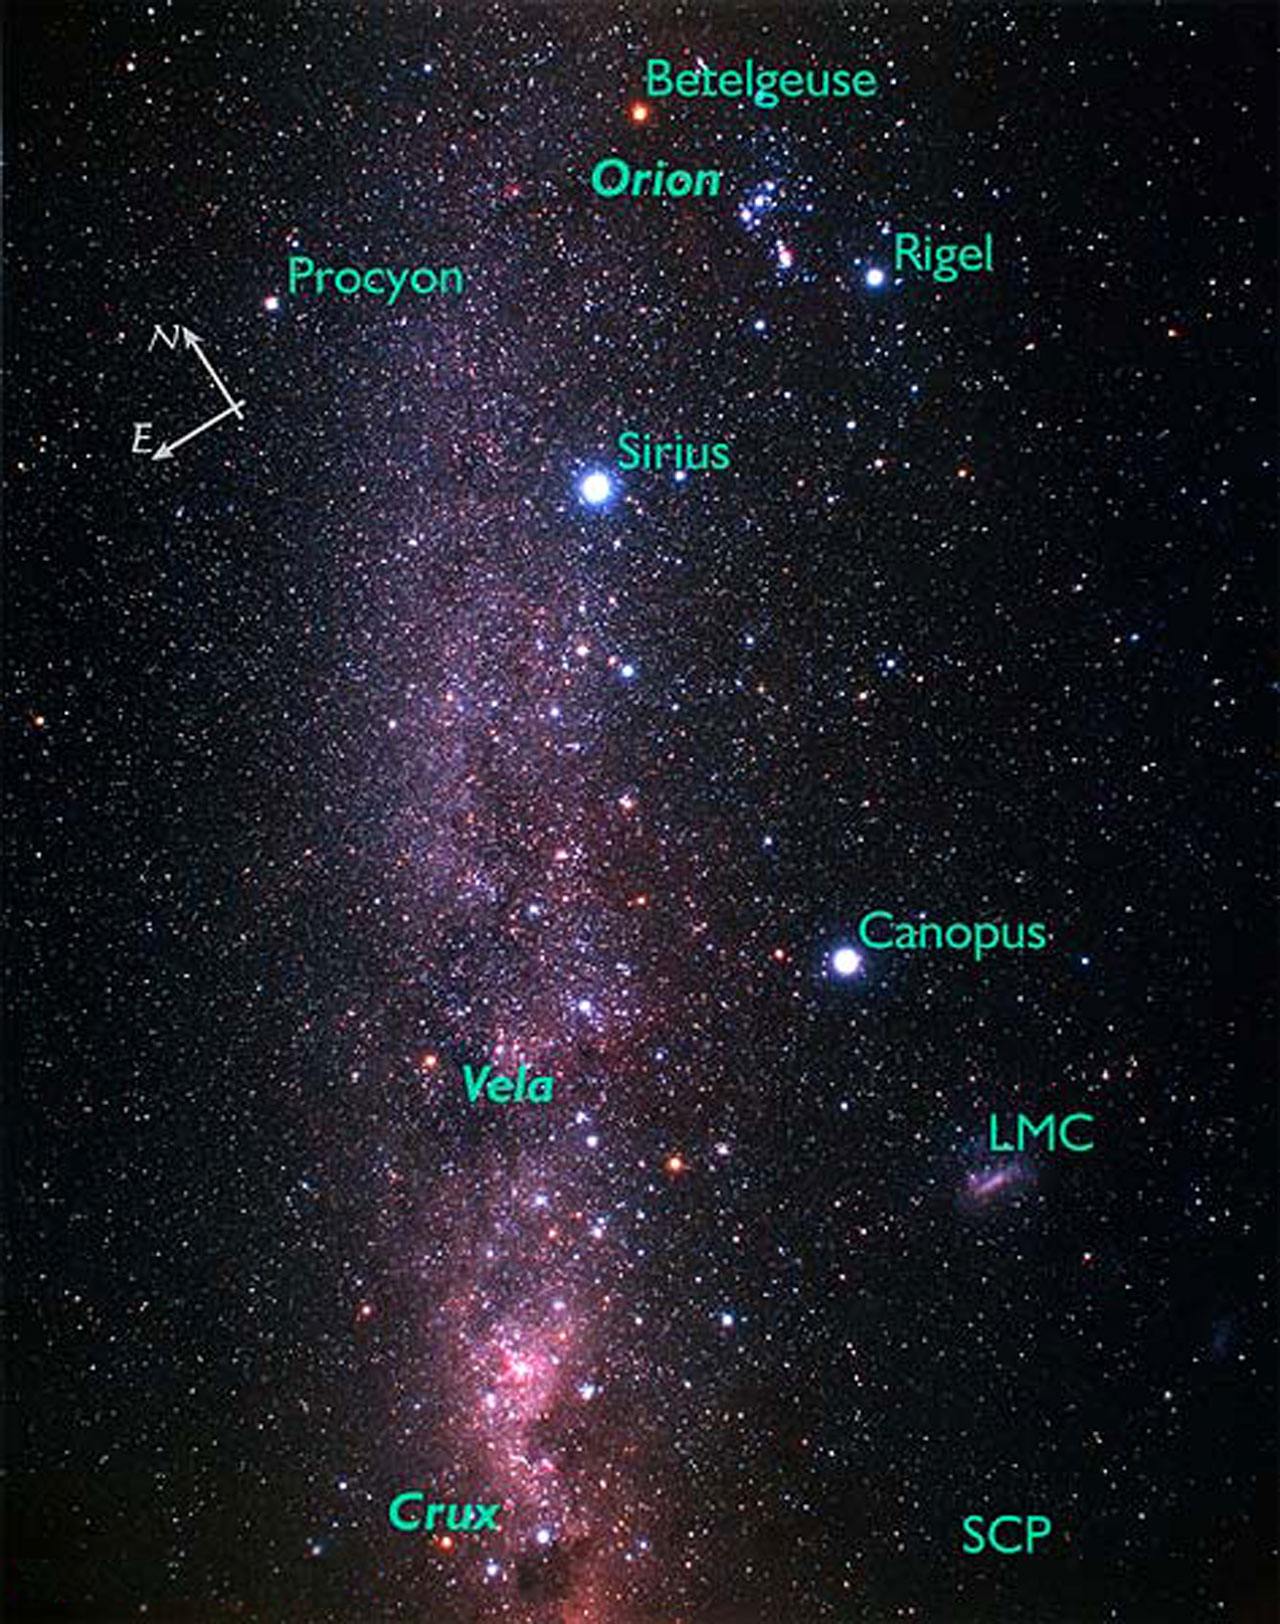 Vela, SNR 263.4-03.0, Betelgeuse, IRAS 05524+0723, Rigel, IRAS 05121-0815, Procyon, IRAS 07366+0520, Orion, M 42, NGC 1976, Messier 42, Sirius, IRAS 06429-1639, Canopus, IRAS 06228-5240, LMC, Large Magellanic Cloud, IRAS 05240-6948, Crux, IRAS 13085-6443, SCP, South Celestial Pole